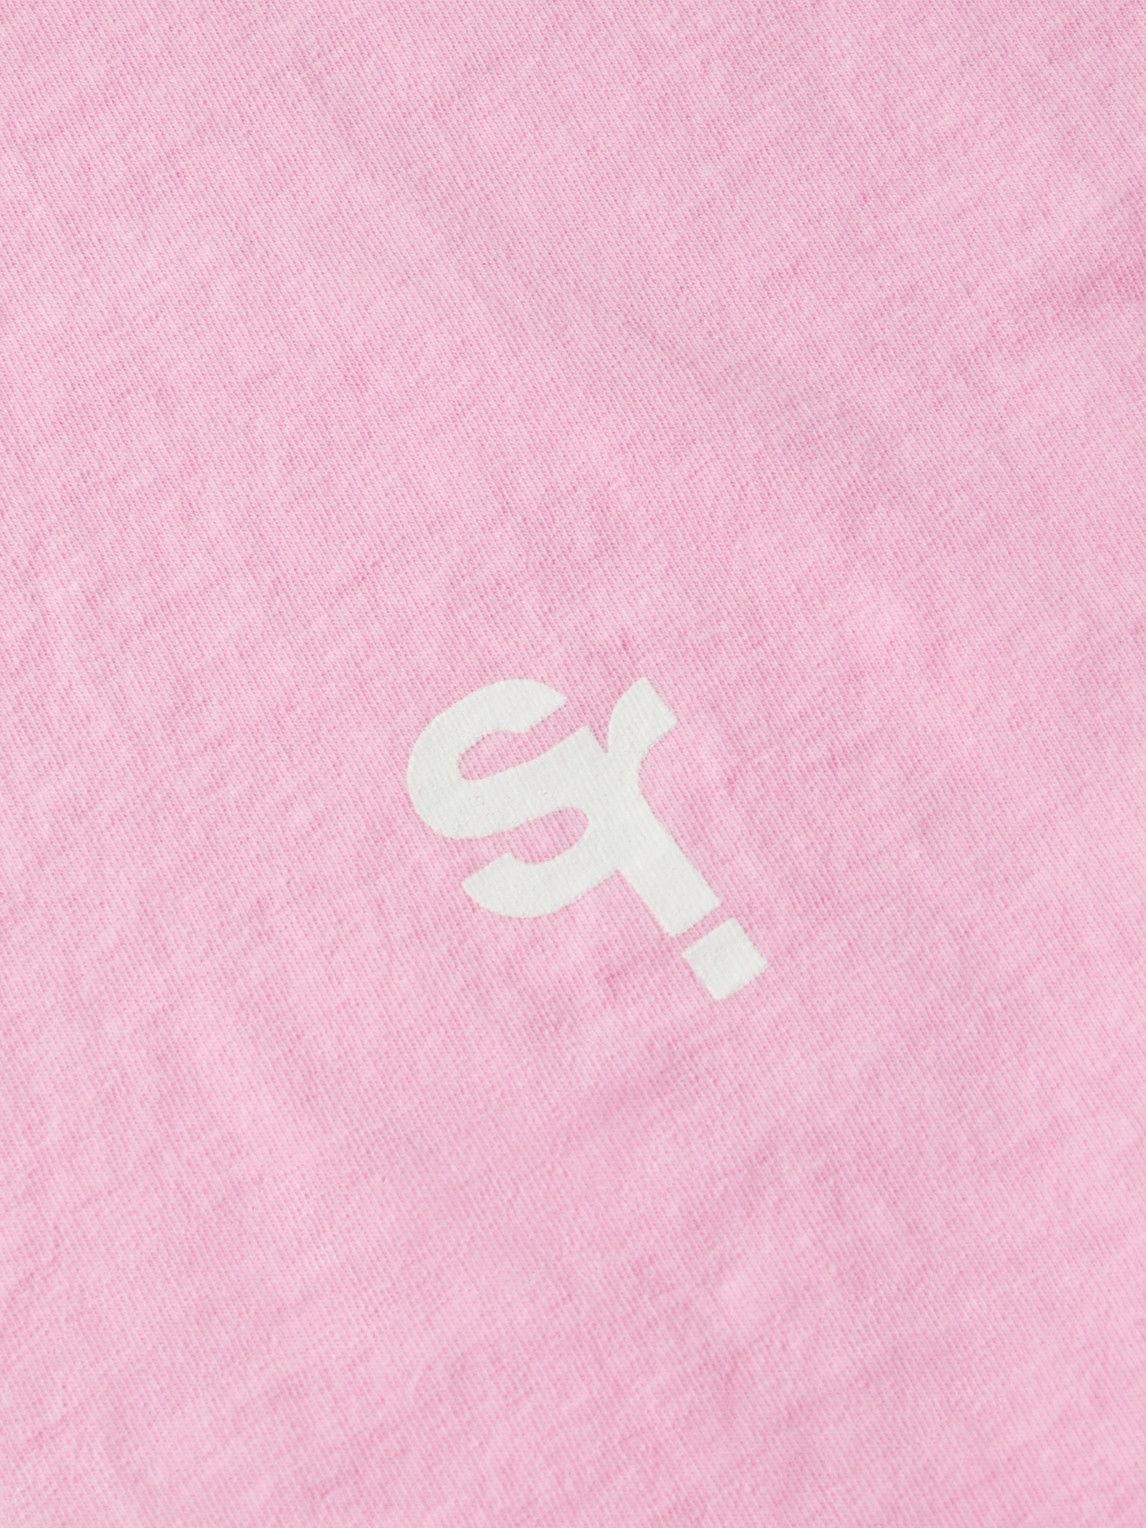 Stray Rats - Logo-Print Cotton-Jersey T-Shirt - Pink